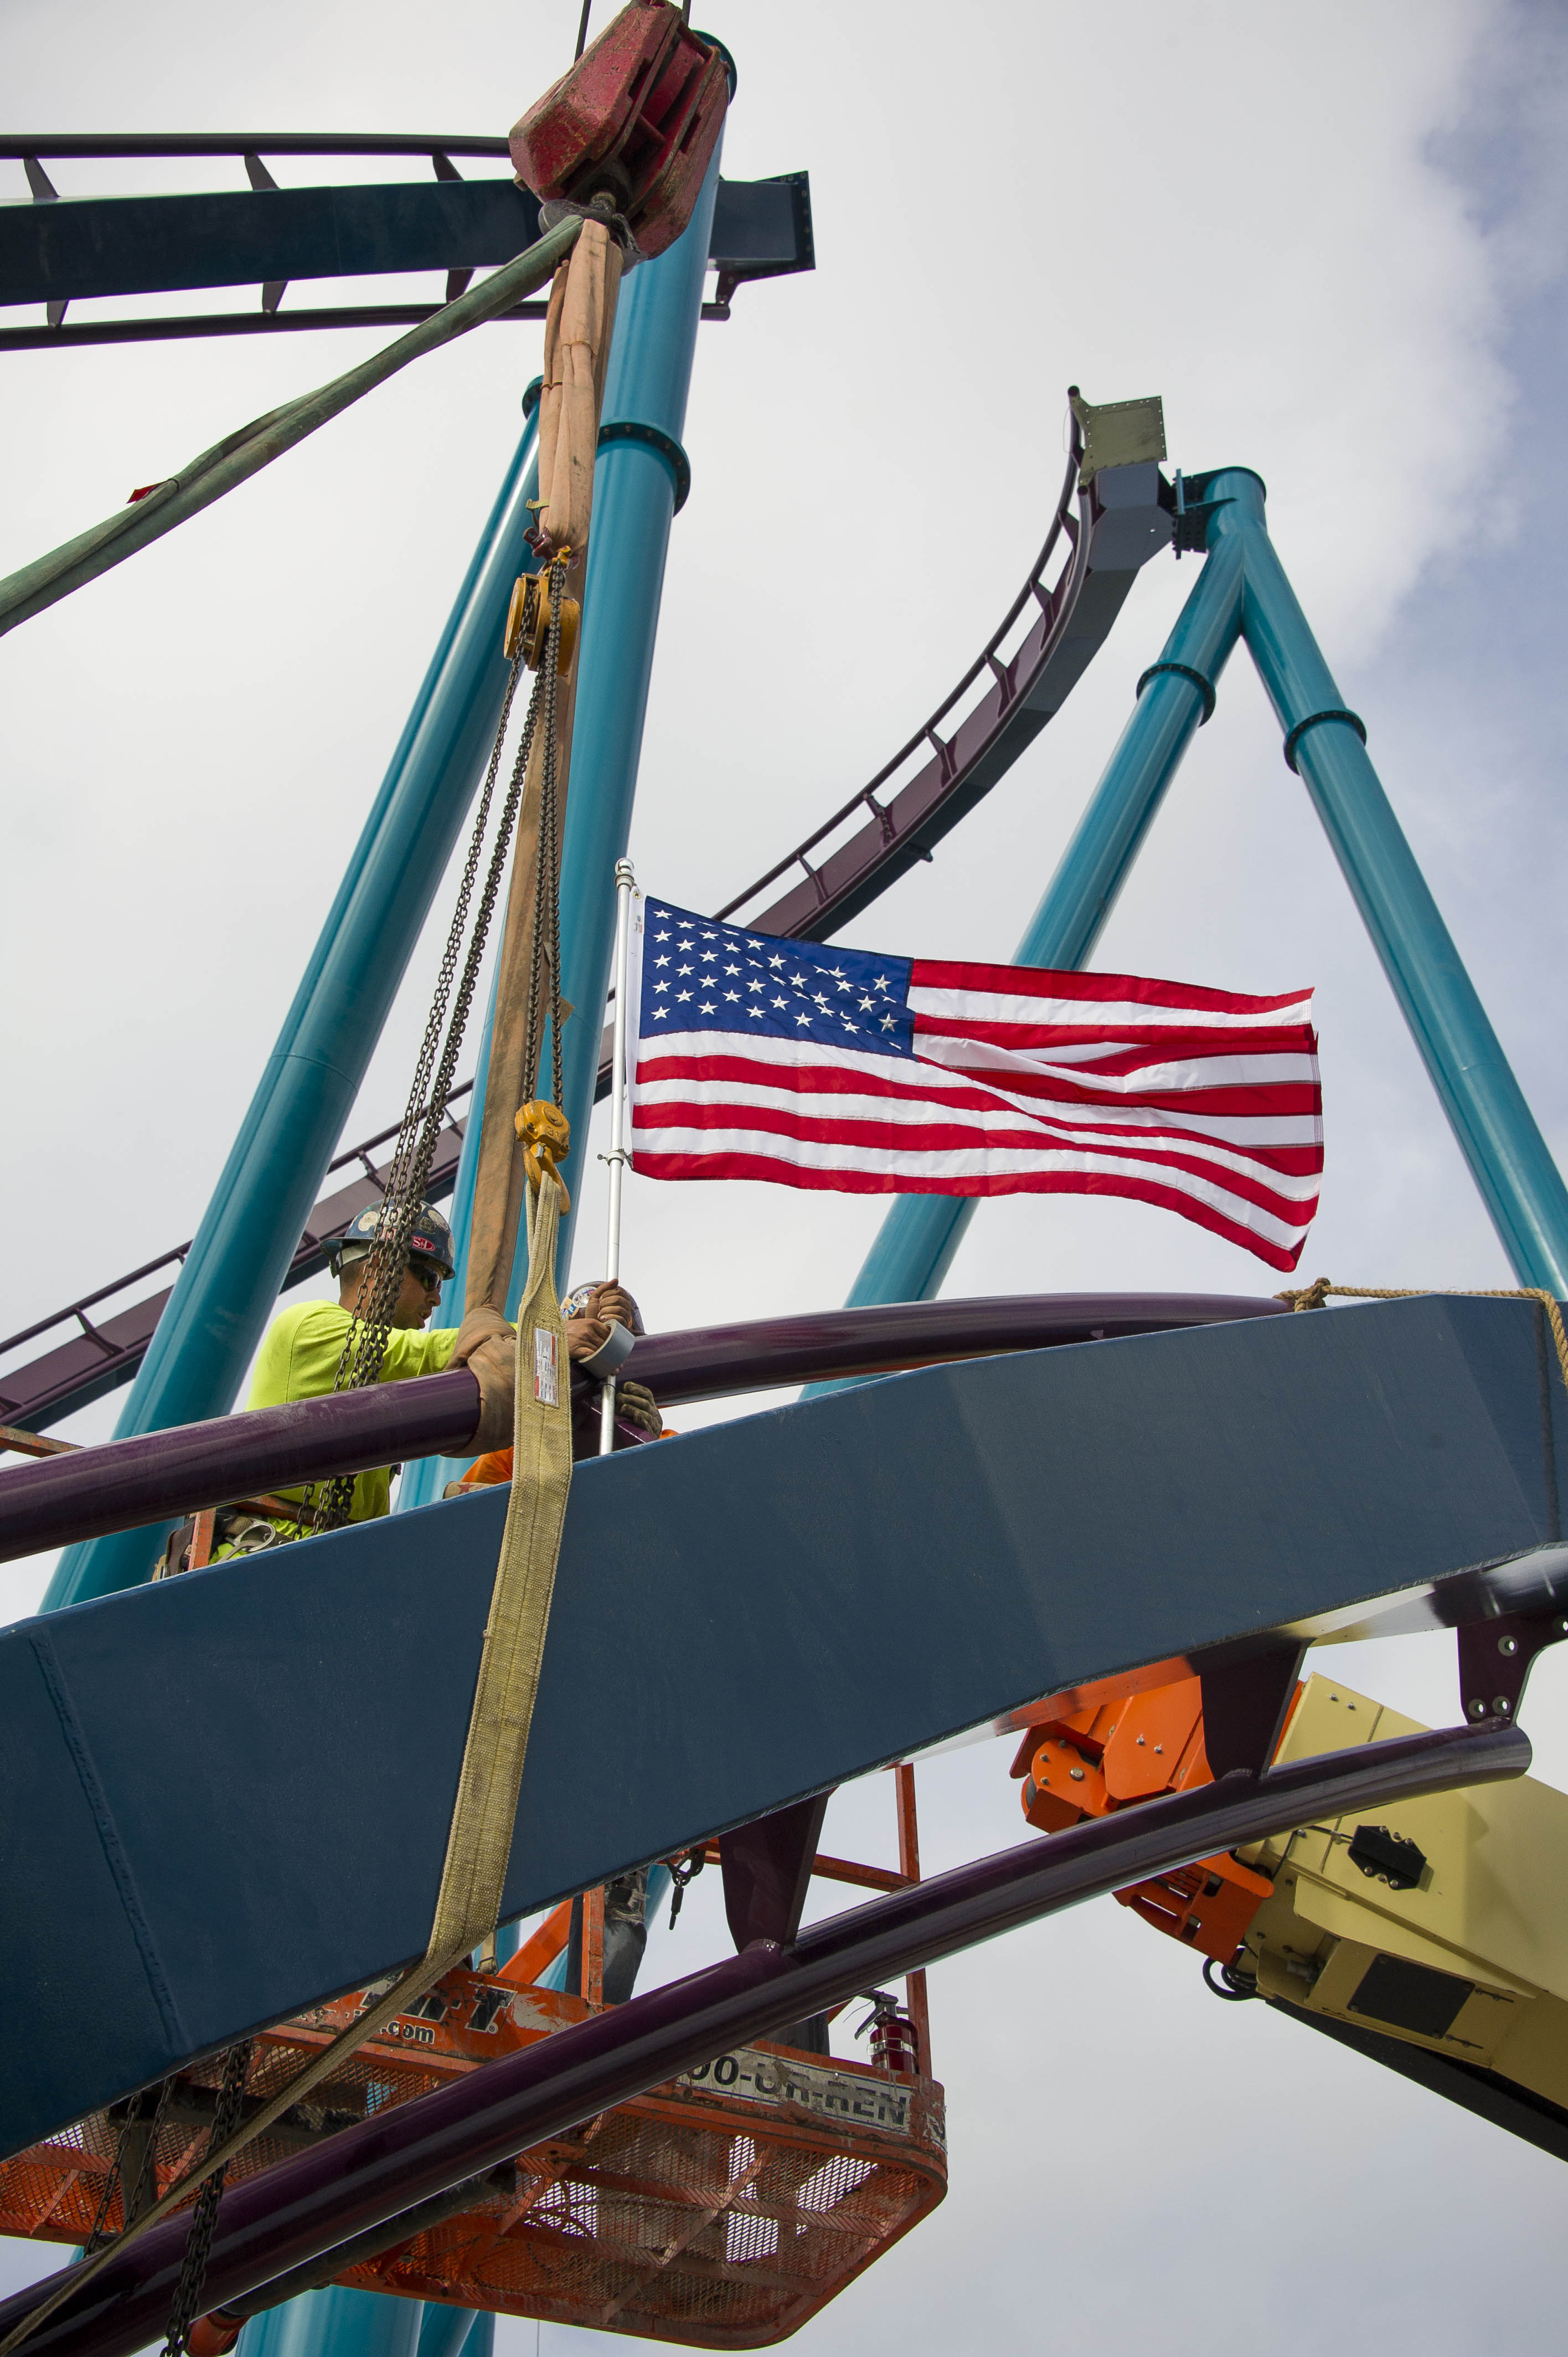 Get Ready for Orlando's Longest Coaster-Mako, SeaWorld Orlando